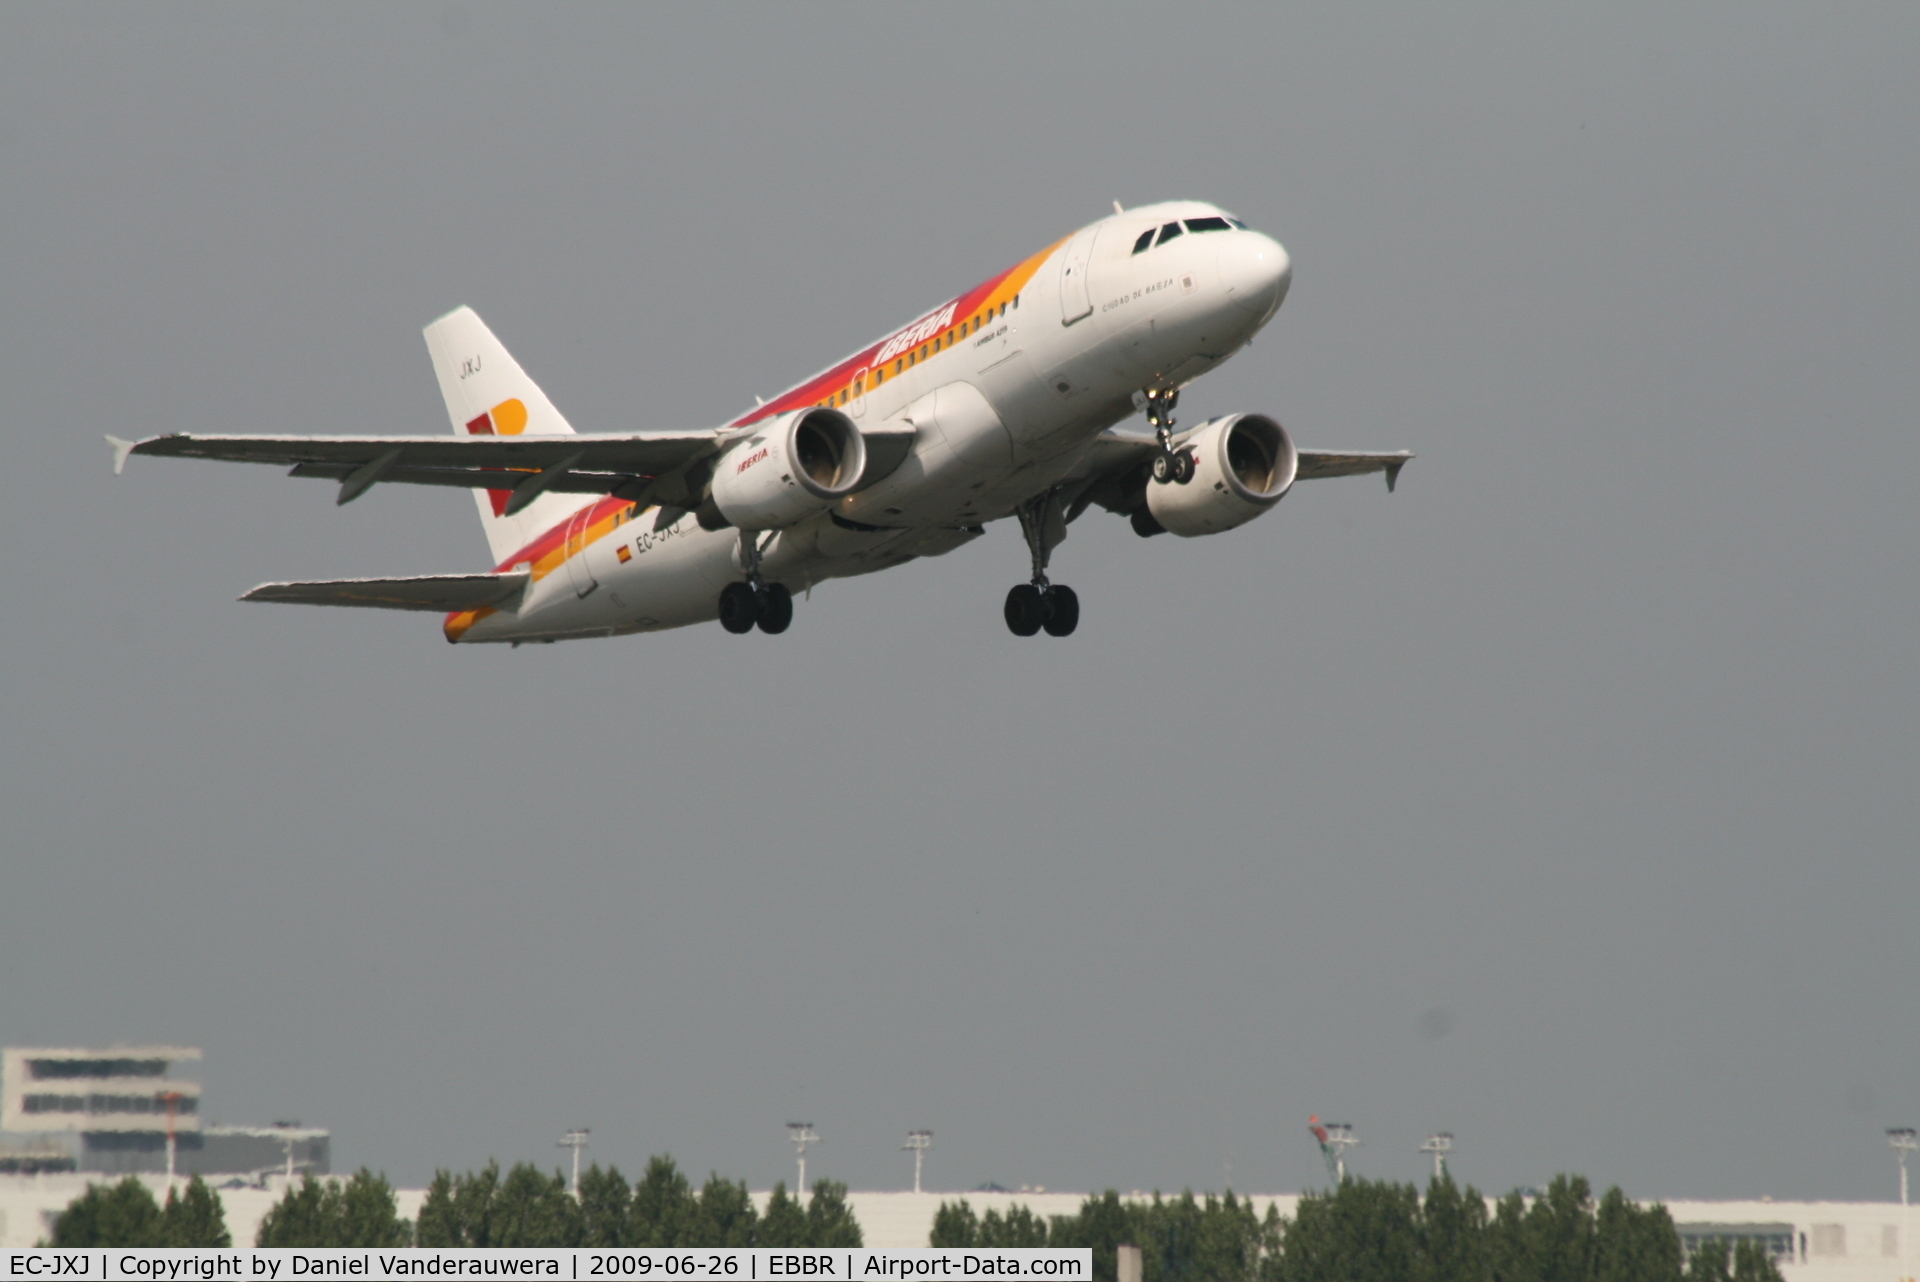 EC-JXJ, 2006 Airbus A319-111 C/N 2889, Flight IB3217 is taking off from rwy 07R